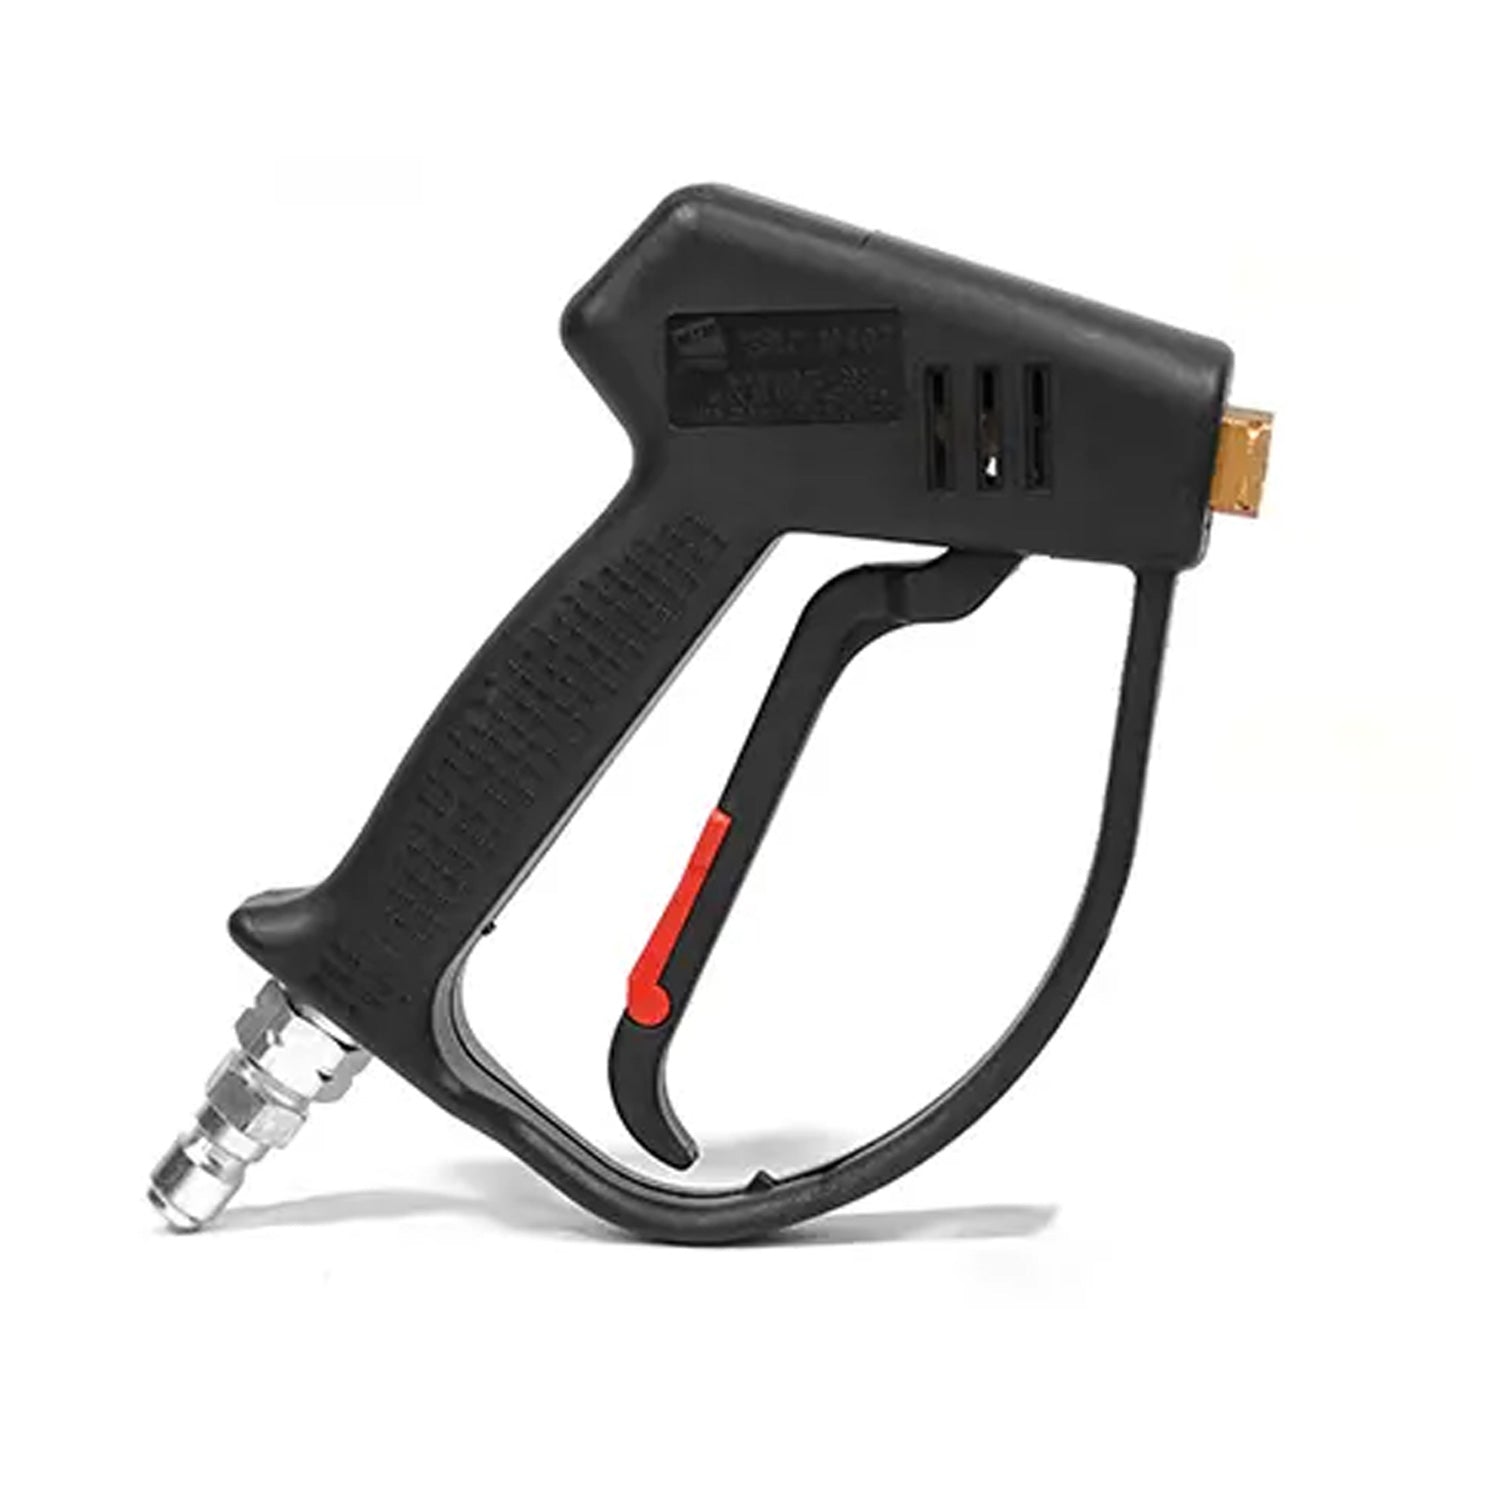 Standard-spray-gun-with-stainless-steel-plug